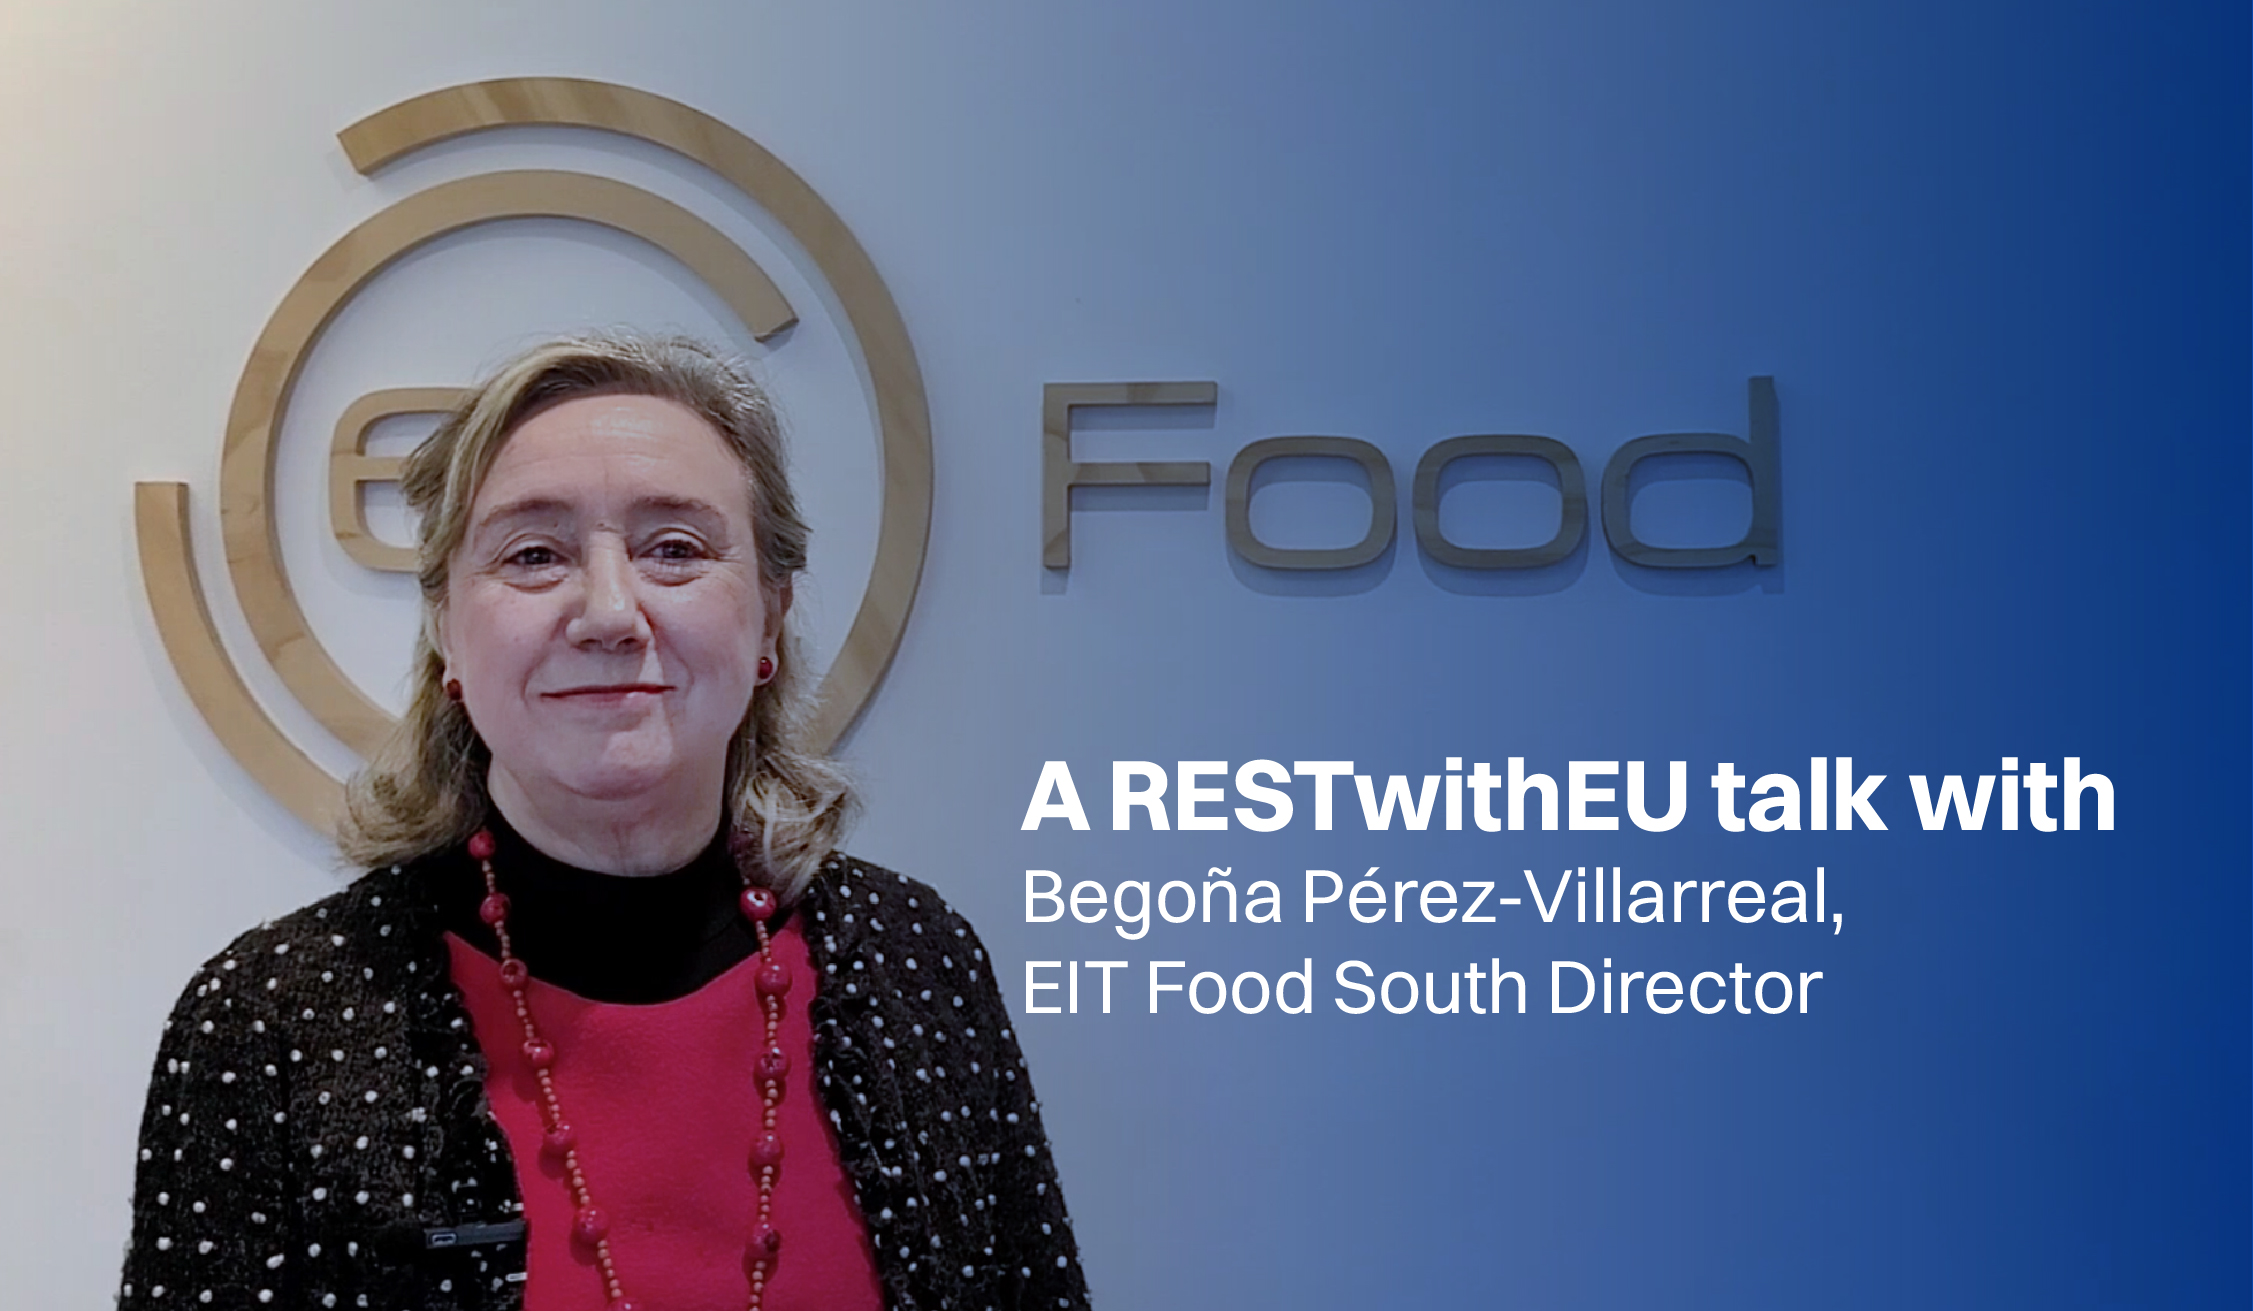 Begoña Pérez-Villarreal, EIT Food South Director